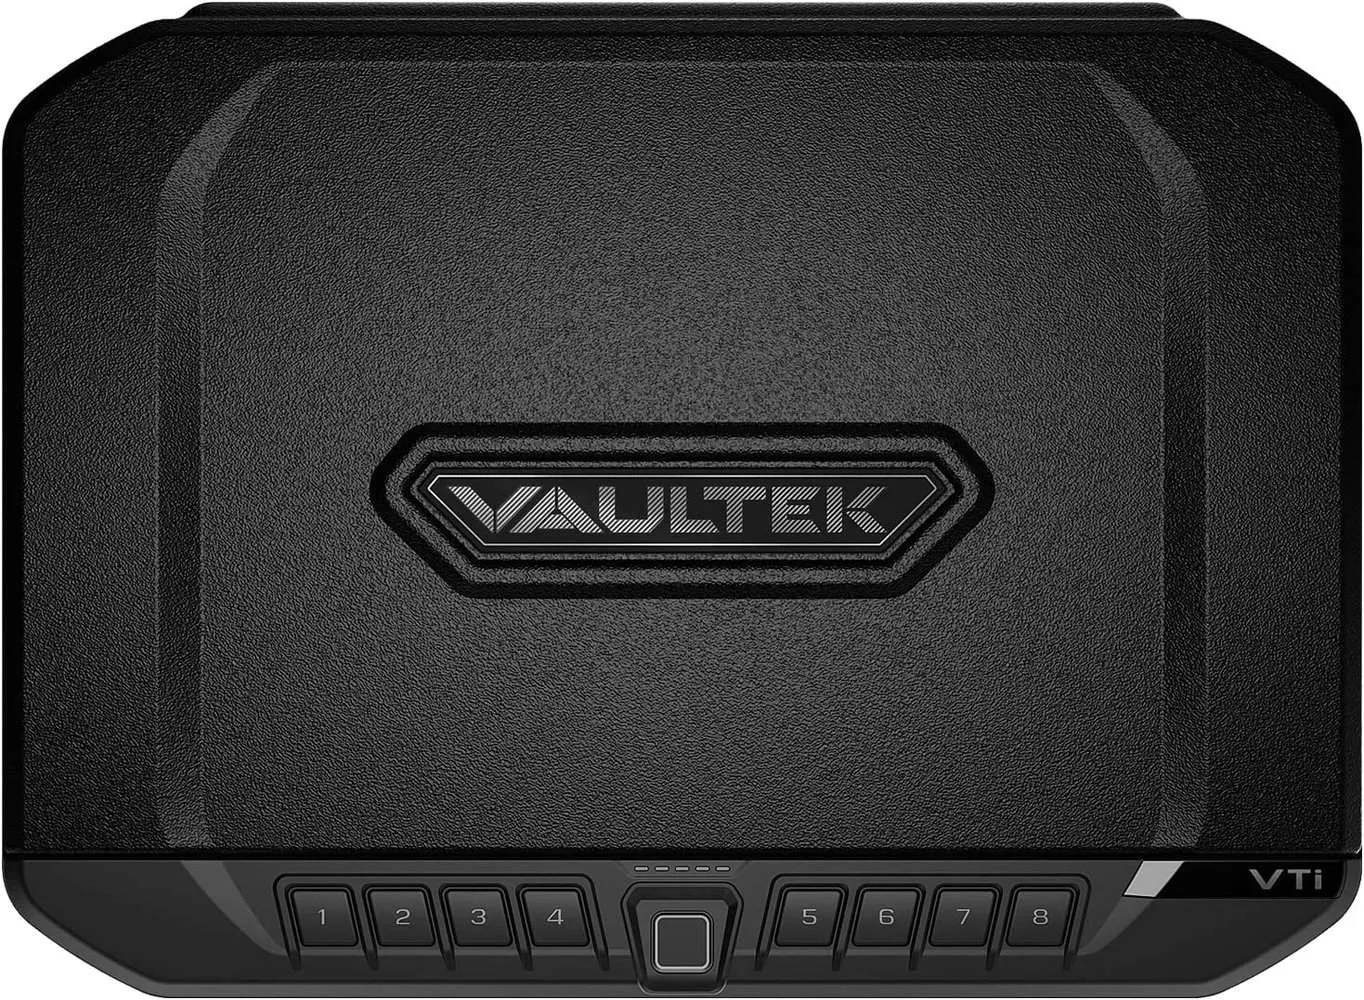 VAULTEK VTi Full-Size Smart Safe